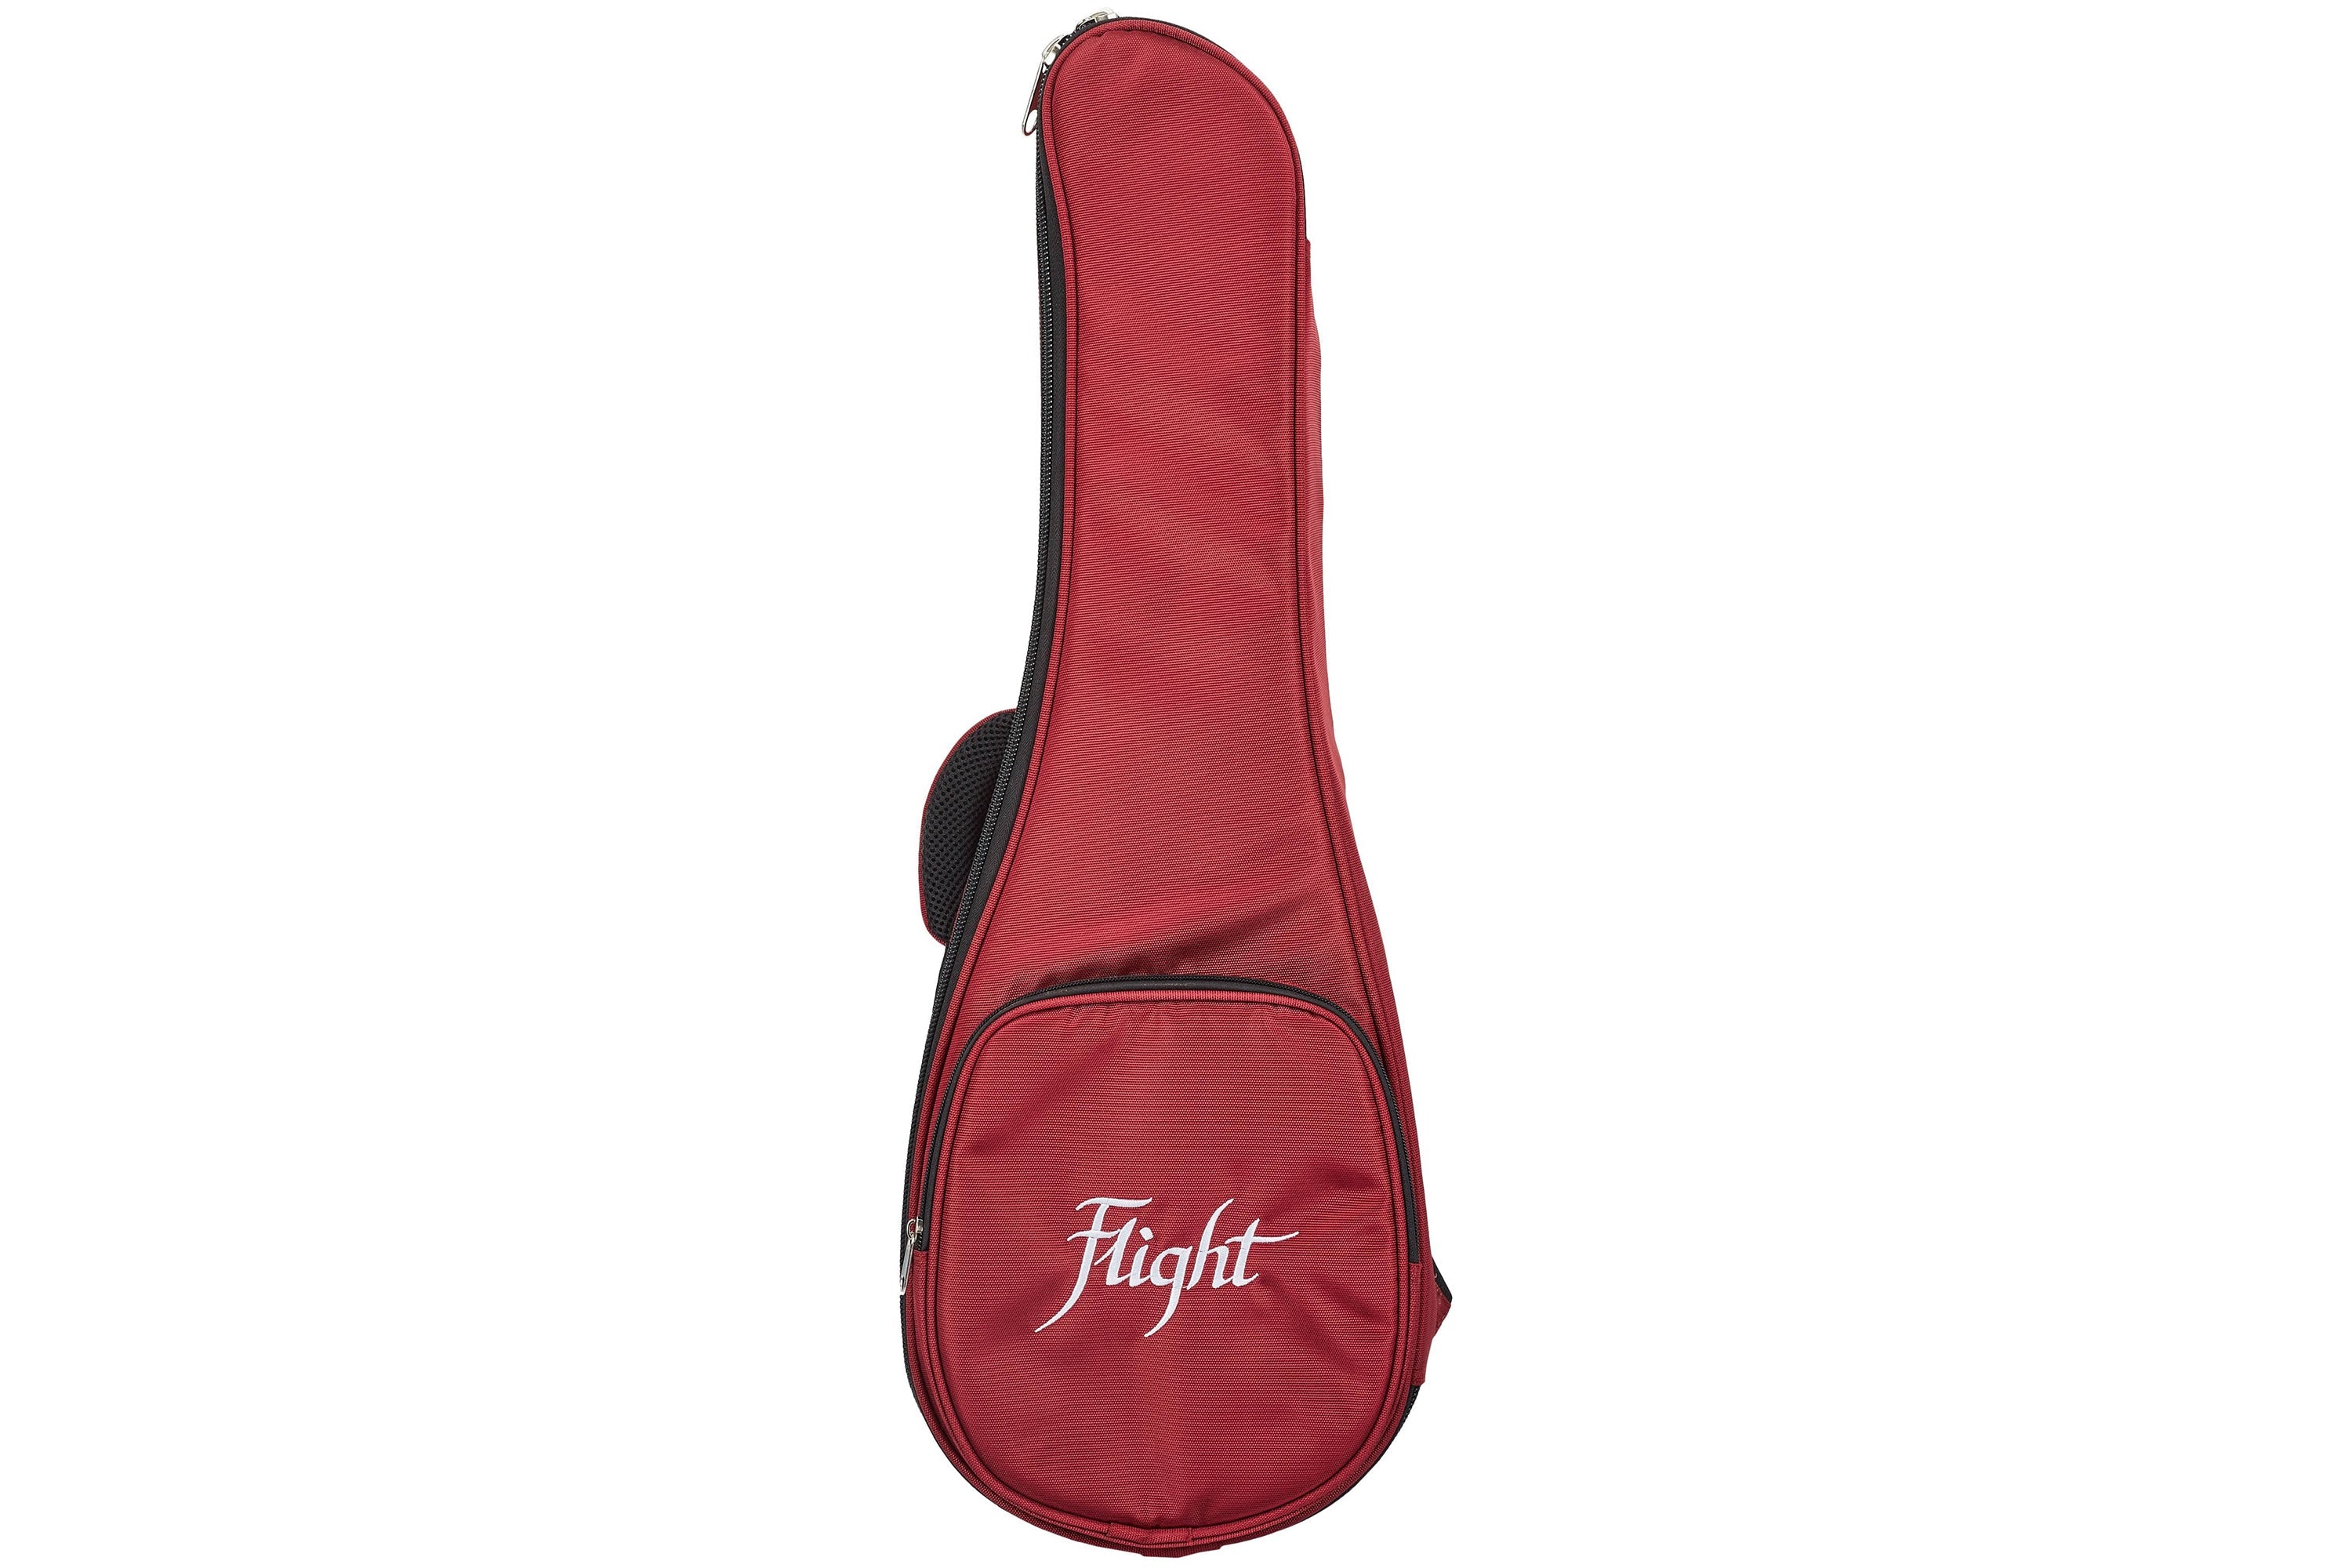 [BAG BLOWOUT] Flight Premium Padded Gigbag - BARITONE - RED